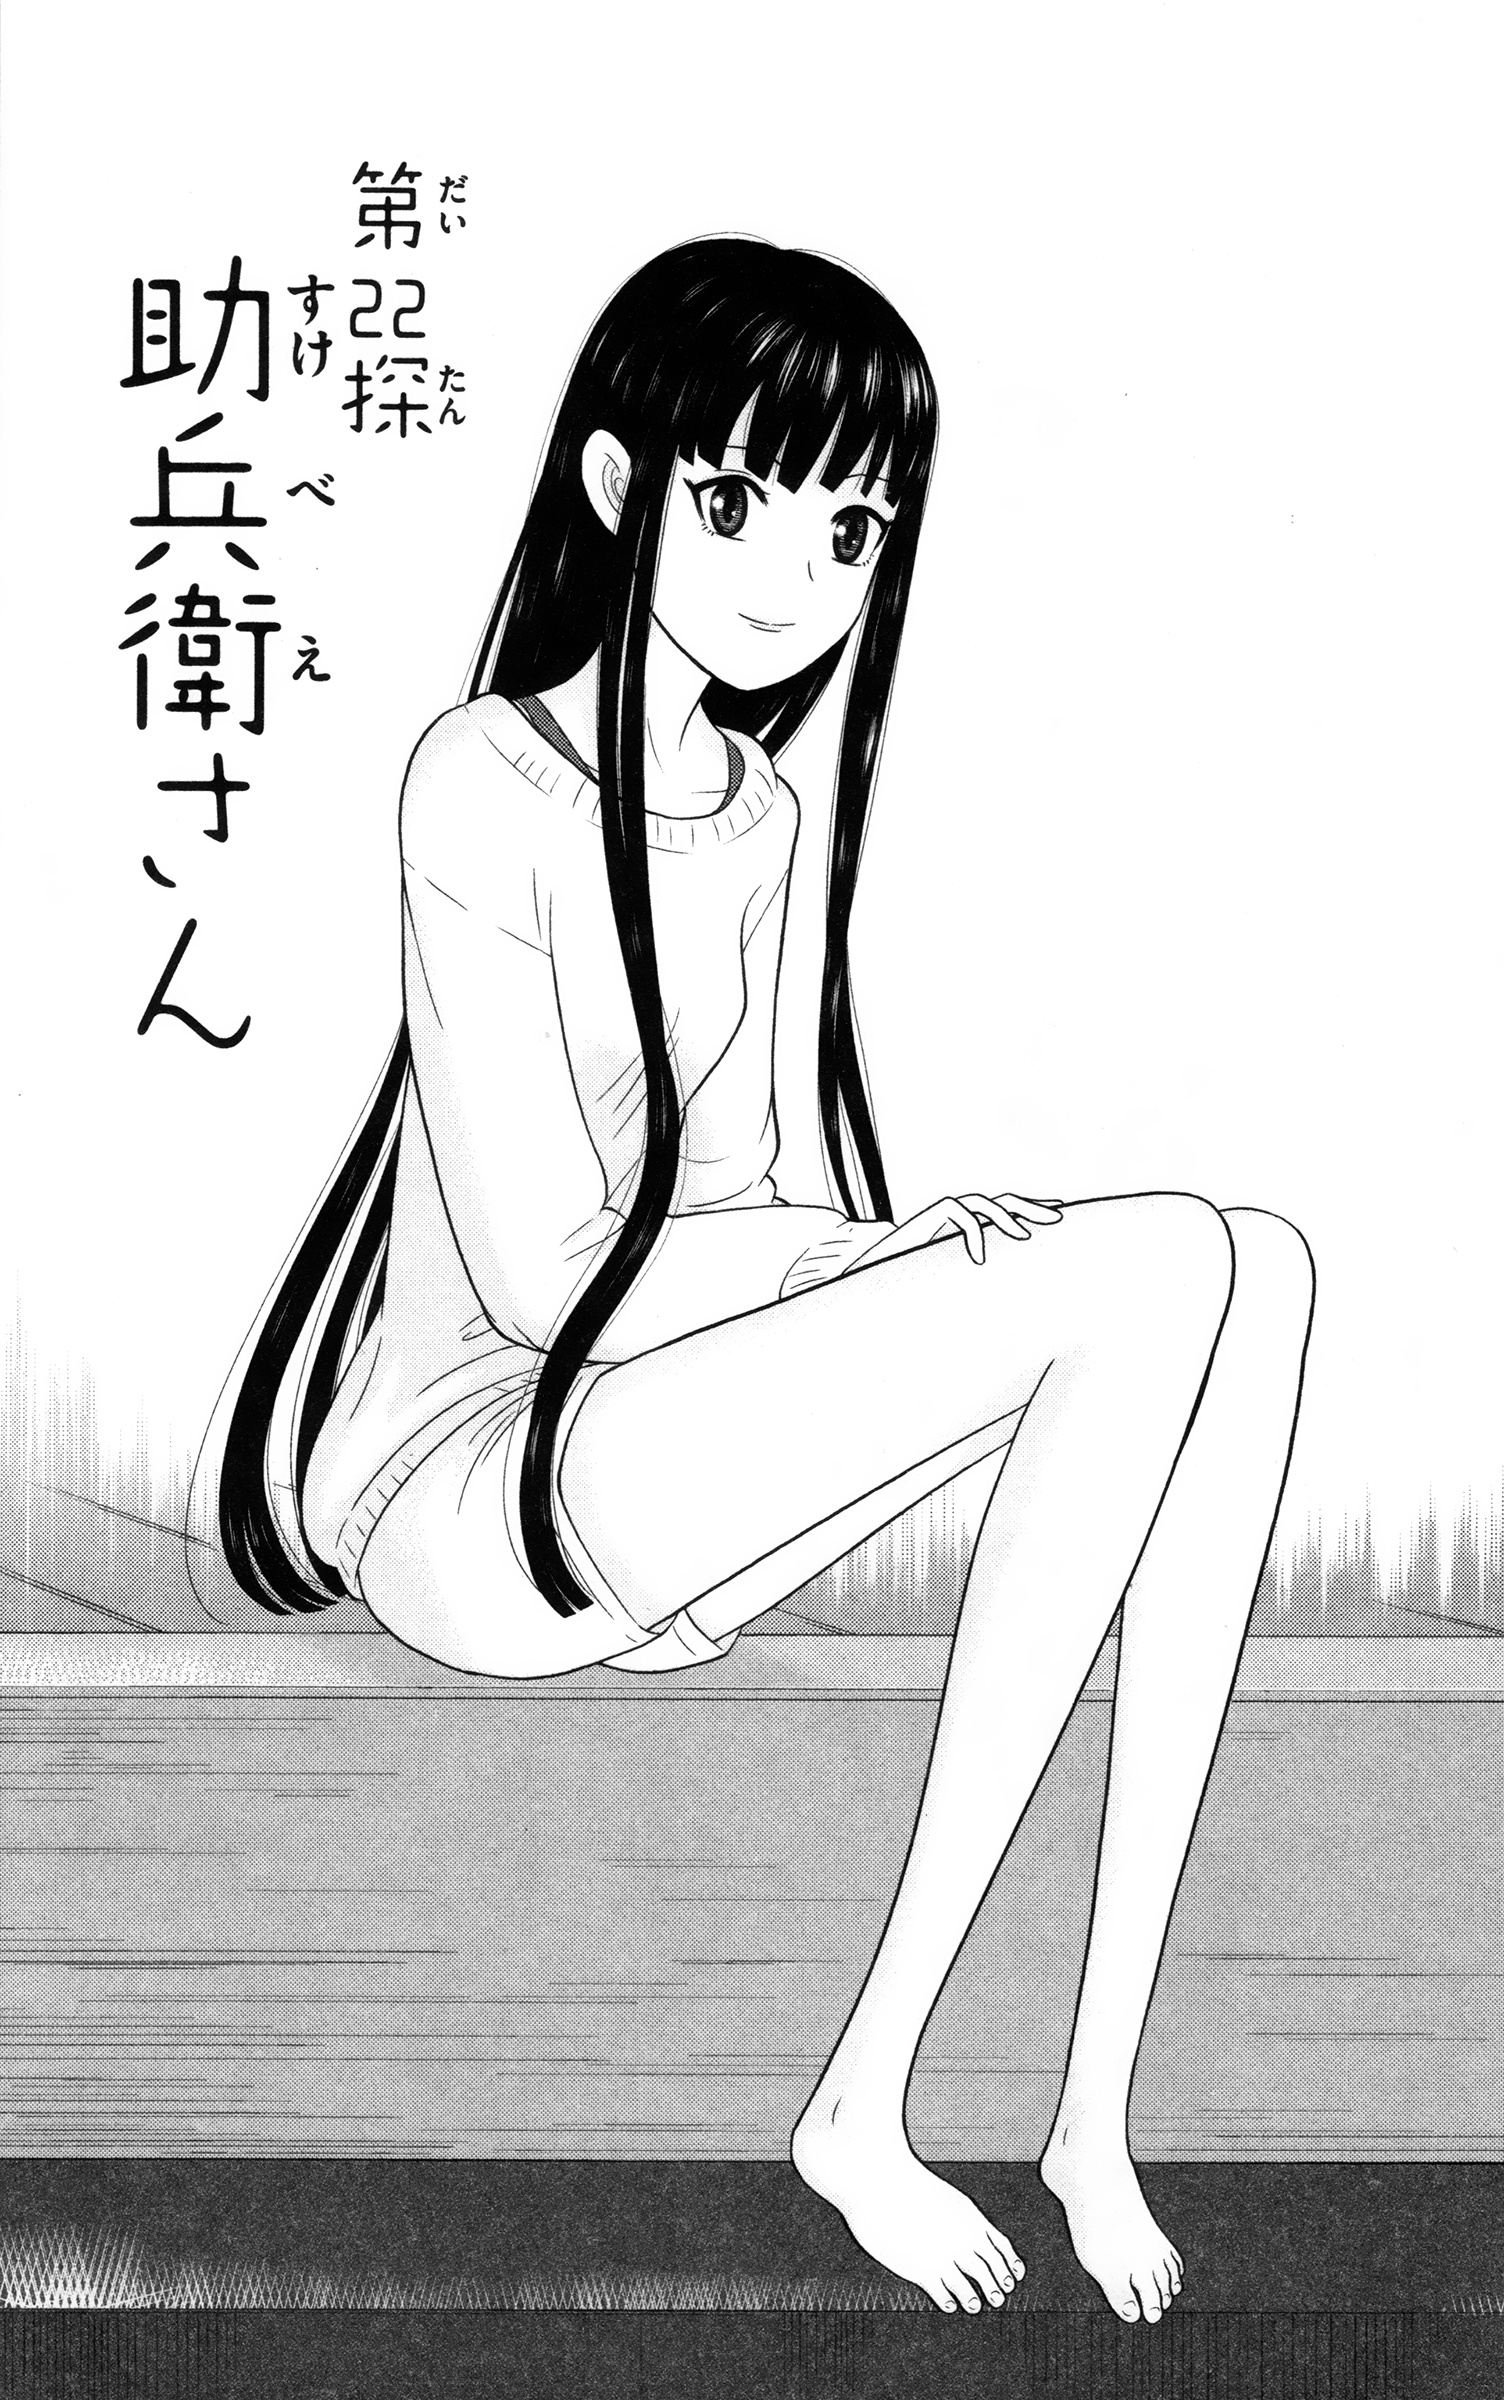 Hiiragi-Sama Is Looking For Herself - chapter 22 - #1